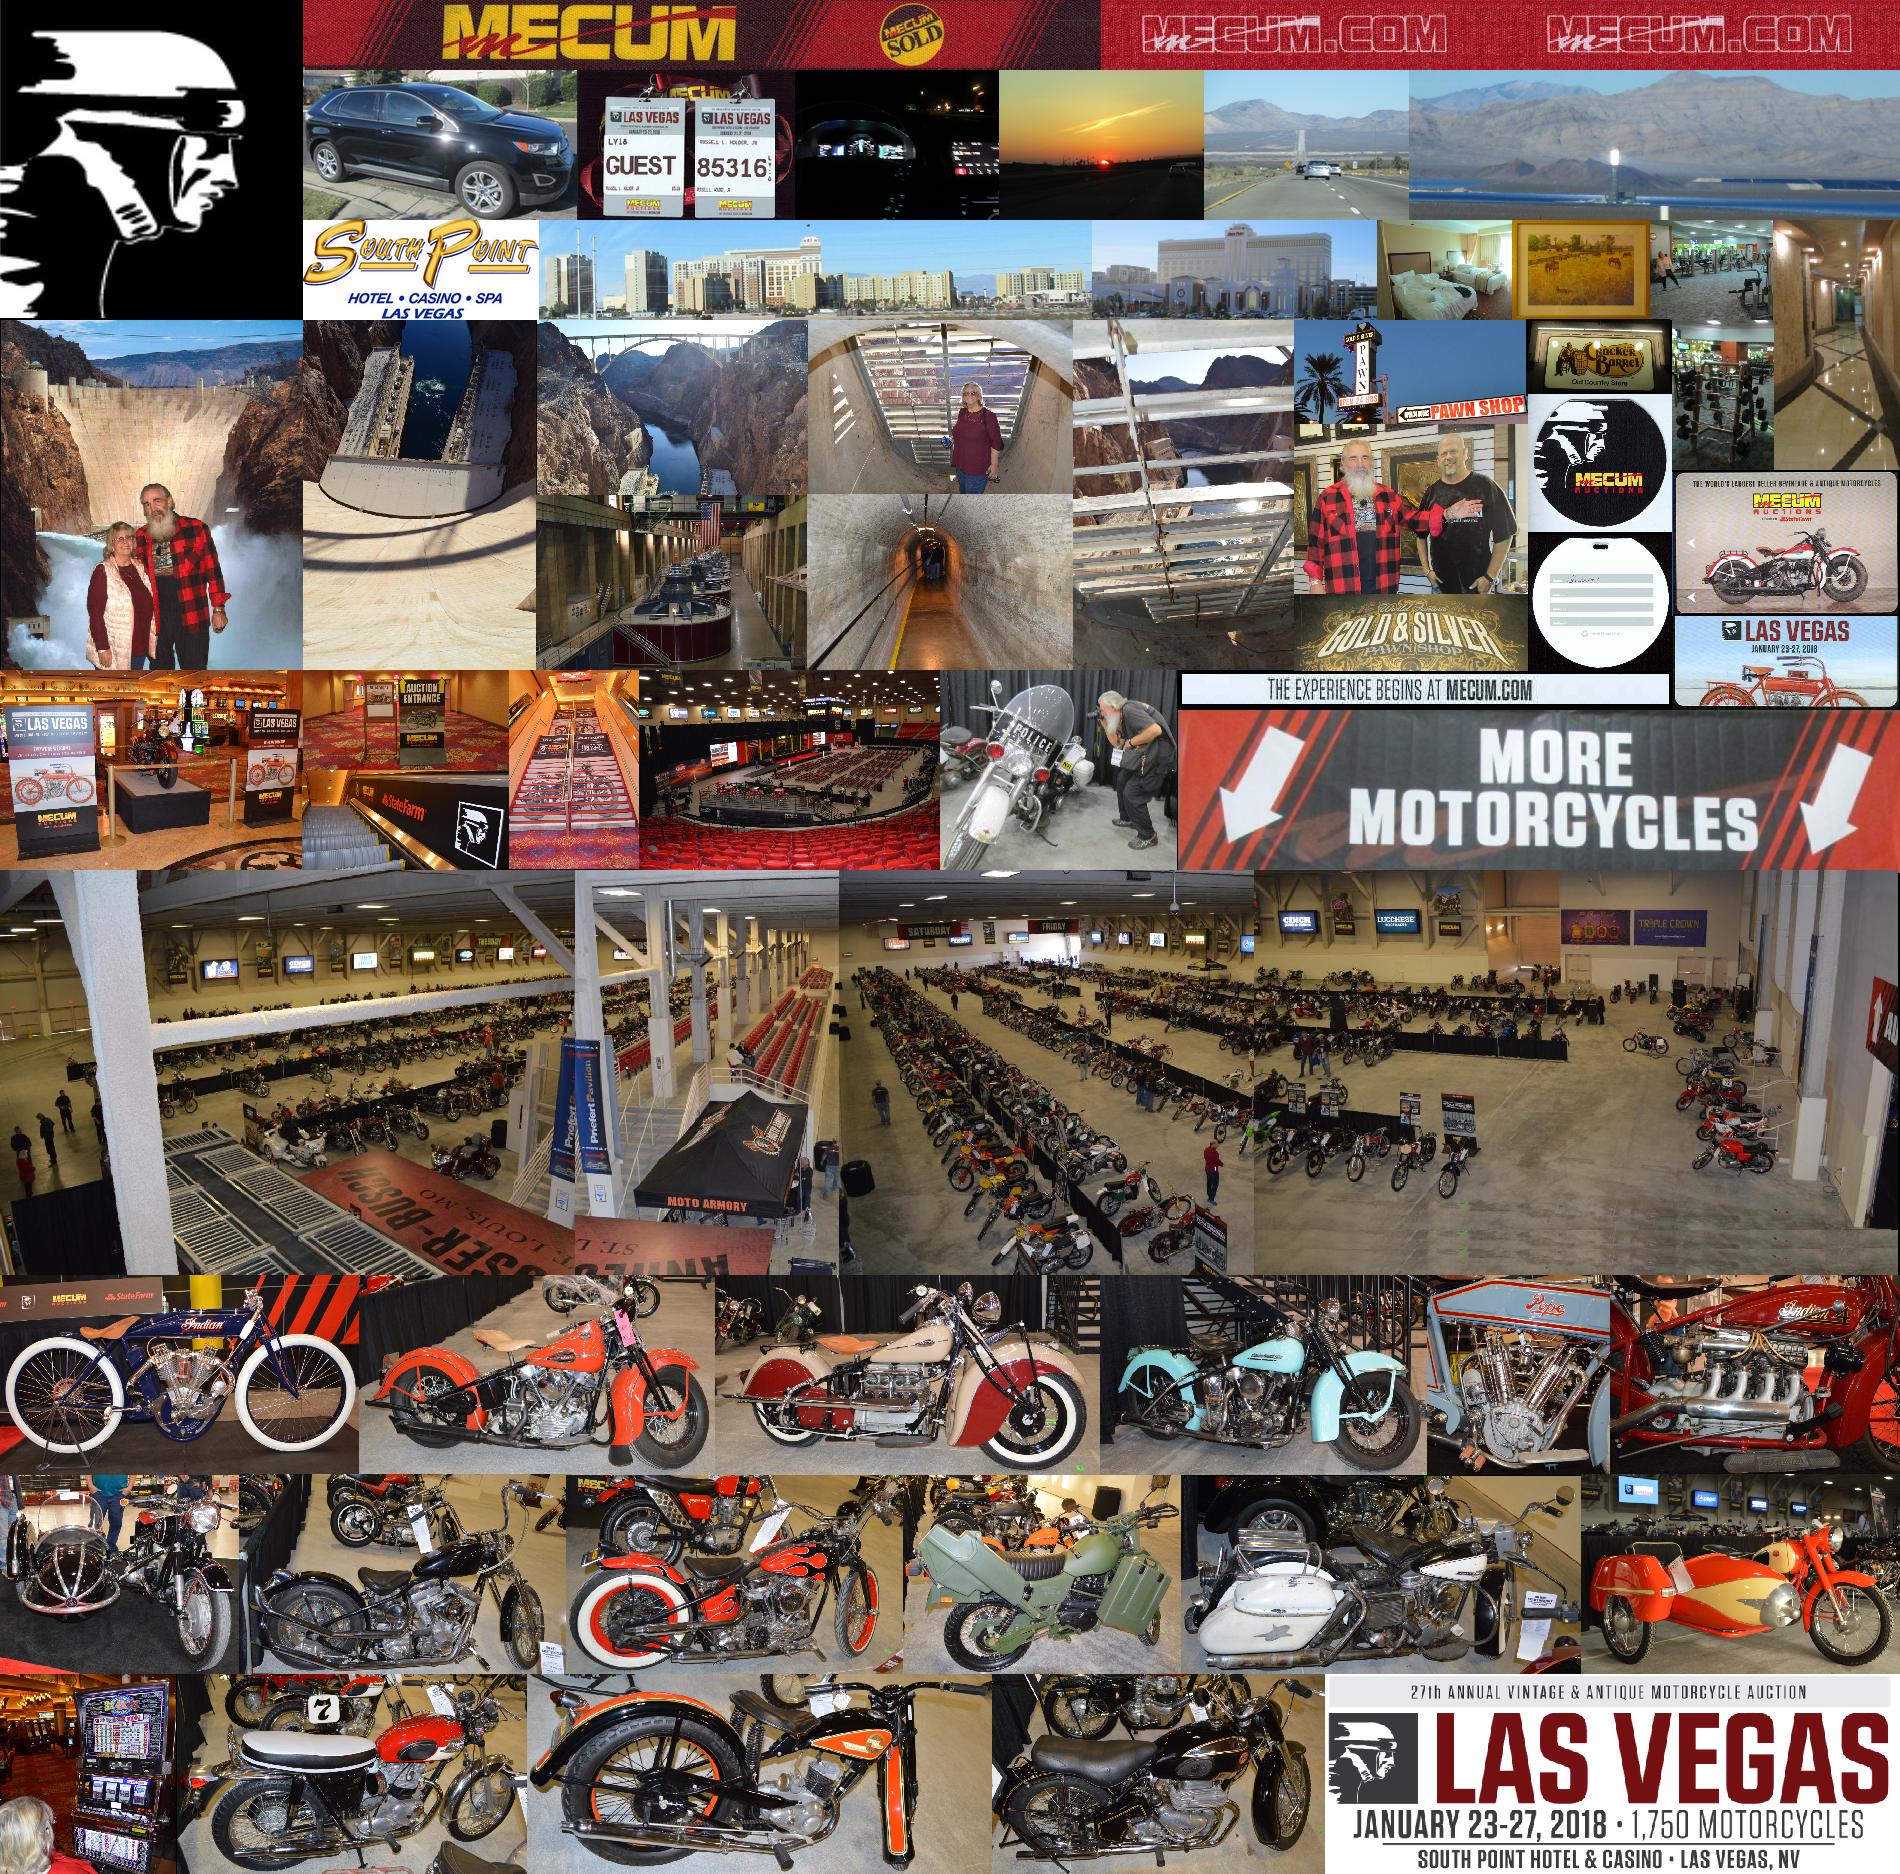 Las Vegas Road Trip 19,...,30JAN18: 28th Annual Vintage and Antique Motorcycle Auction, Las Vegas - 23-27JAN18